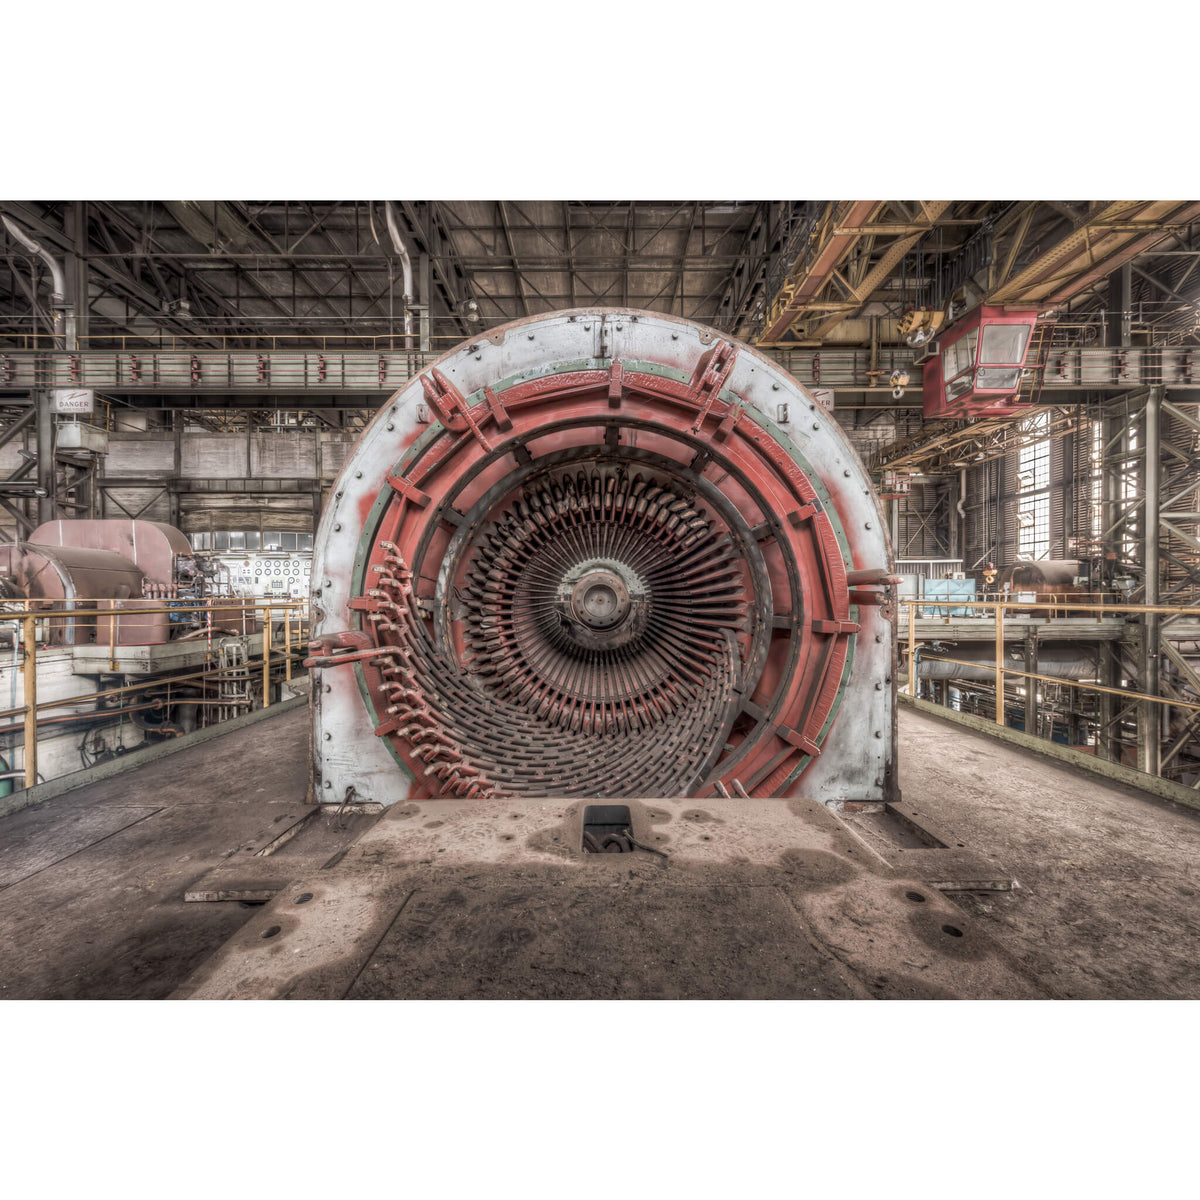 Generator | Morwell Power Station